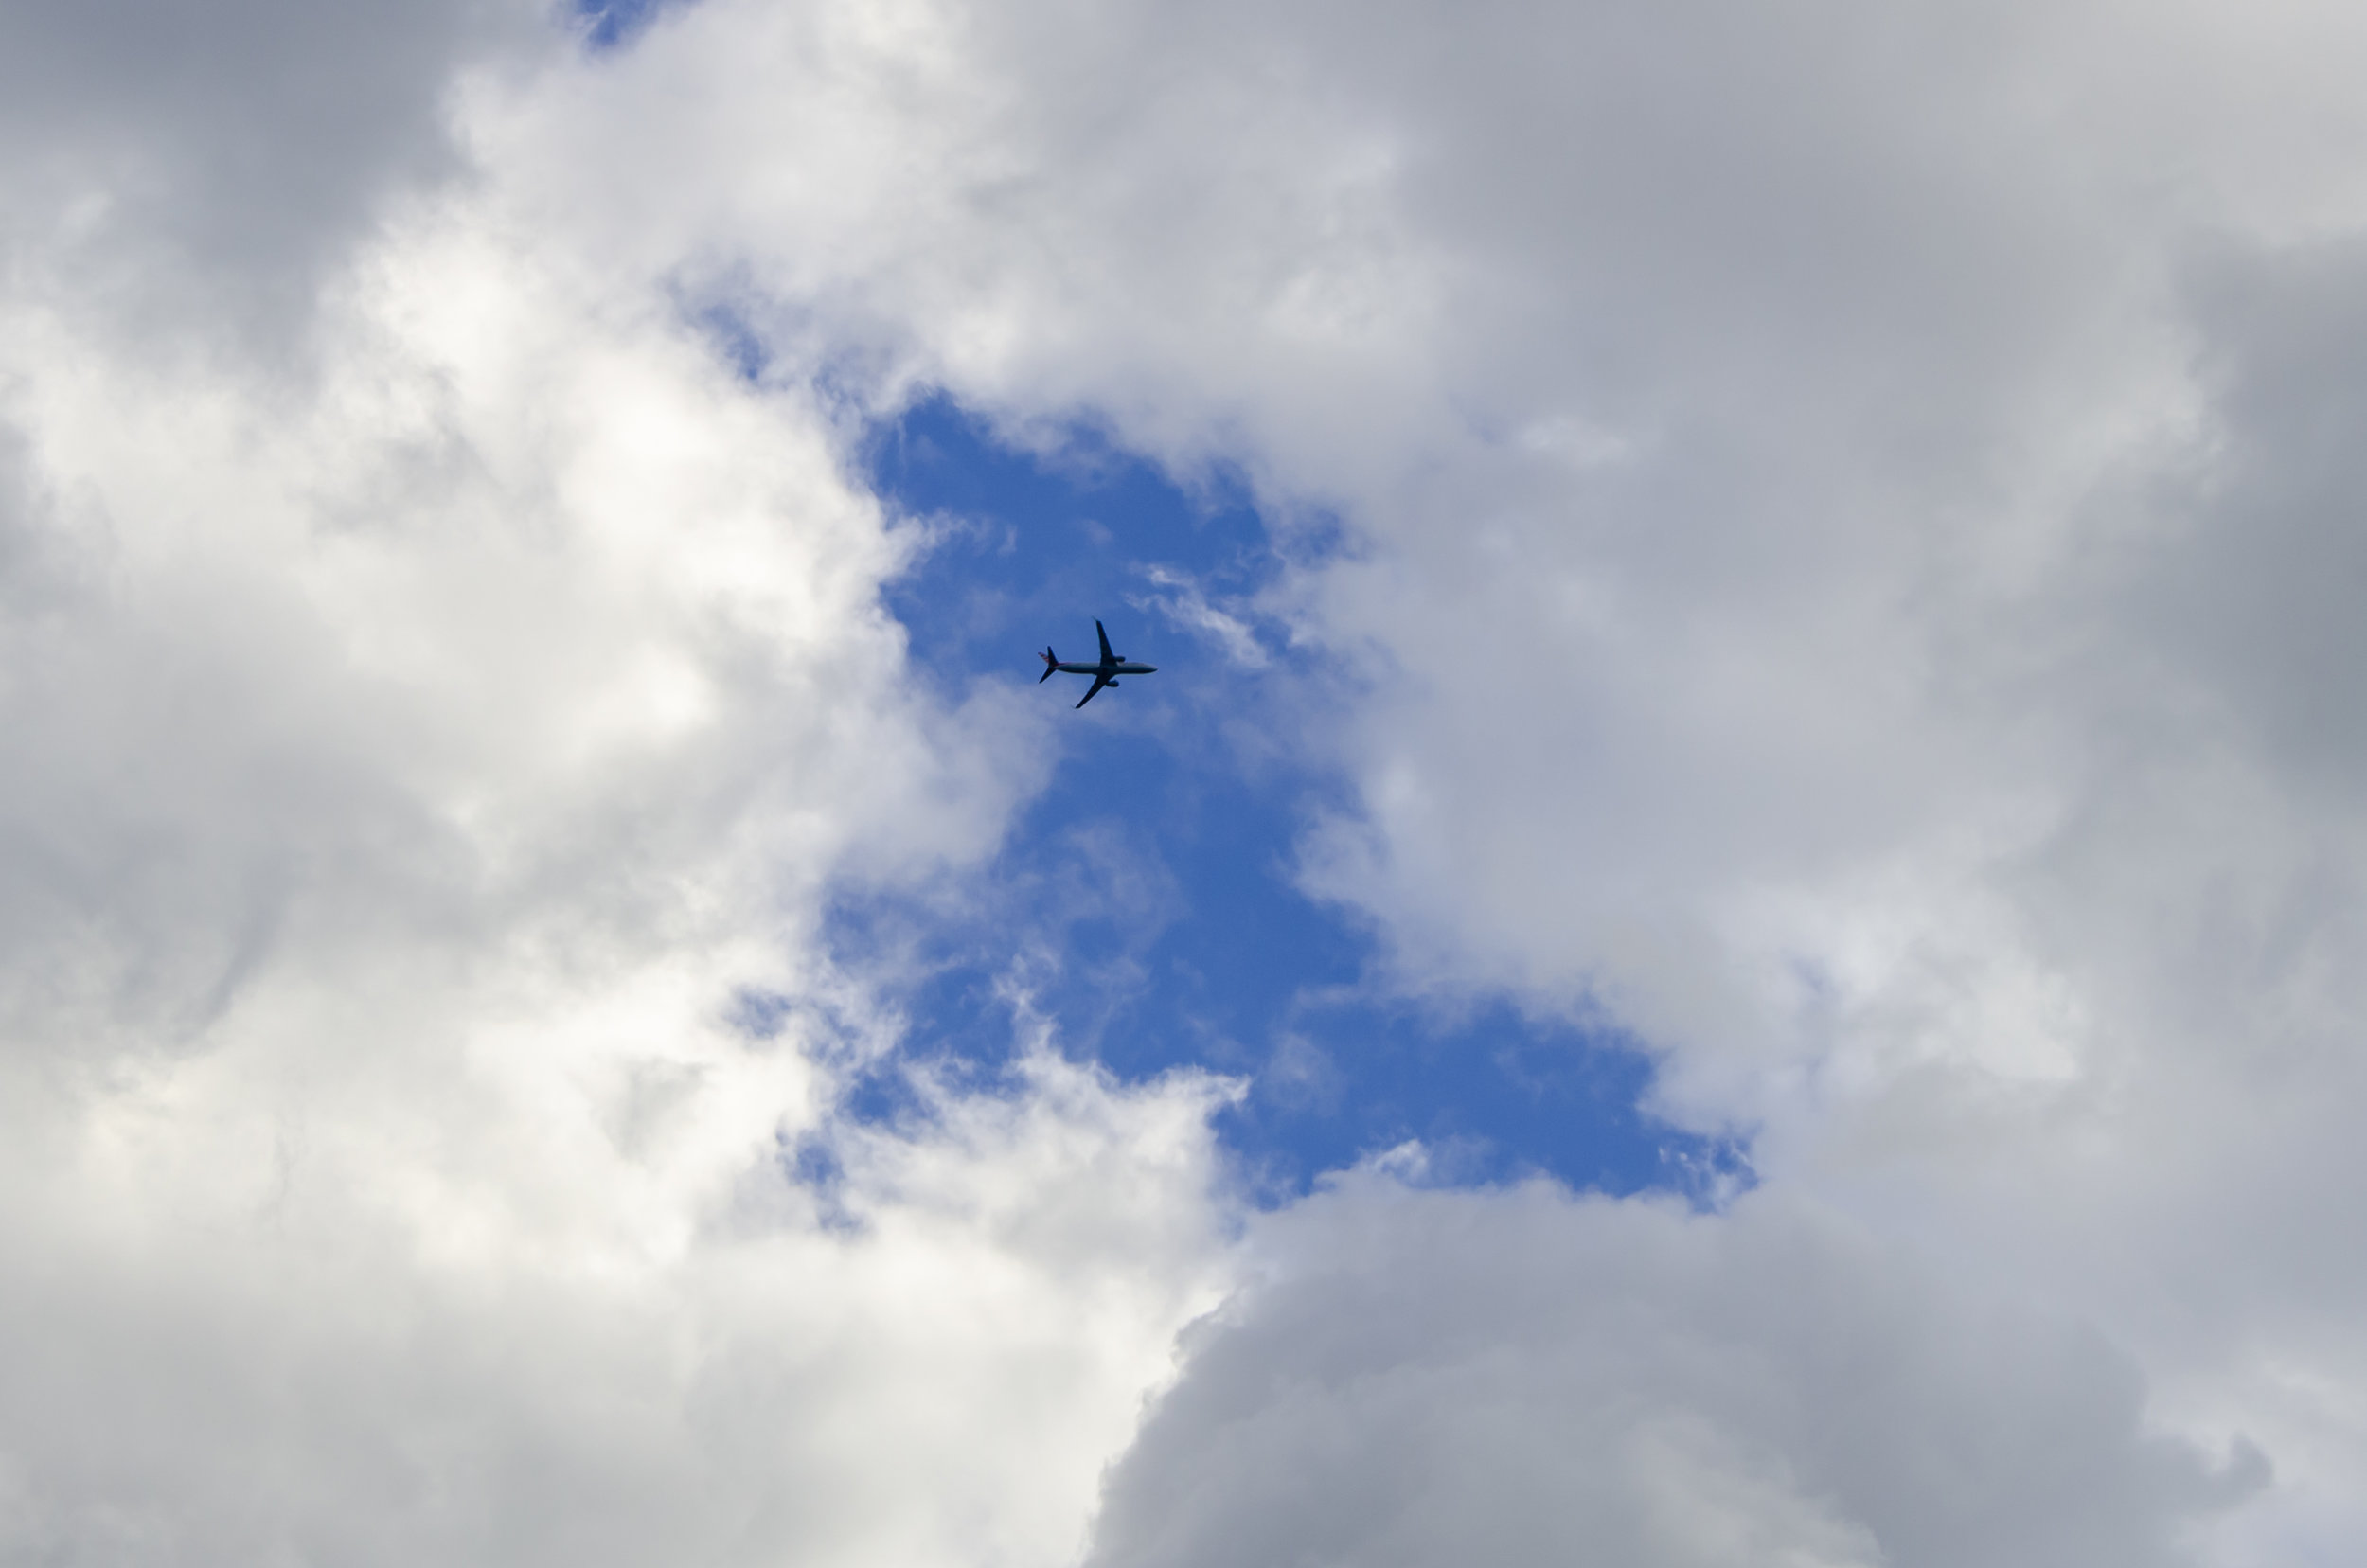 Plane in clouds v2 - vc park.jpg